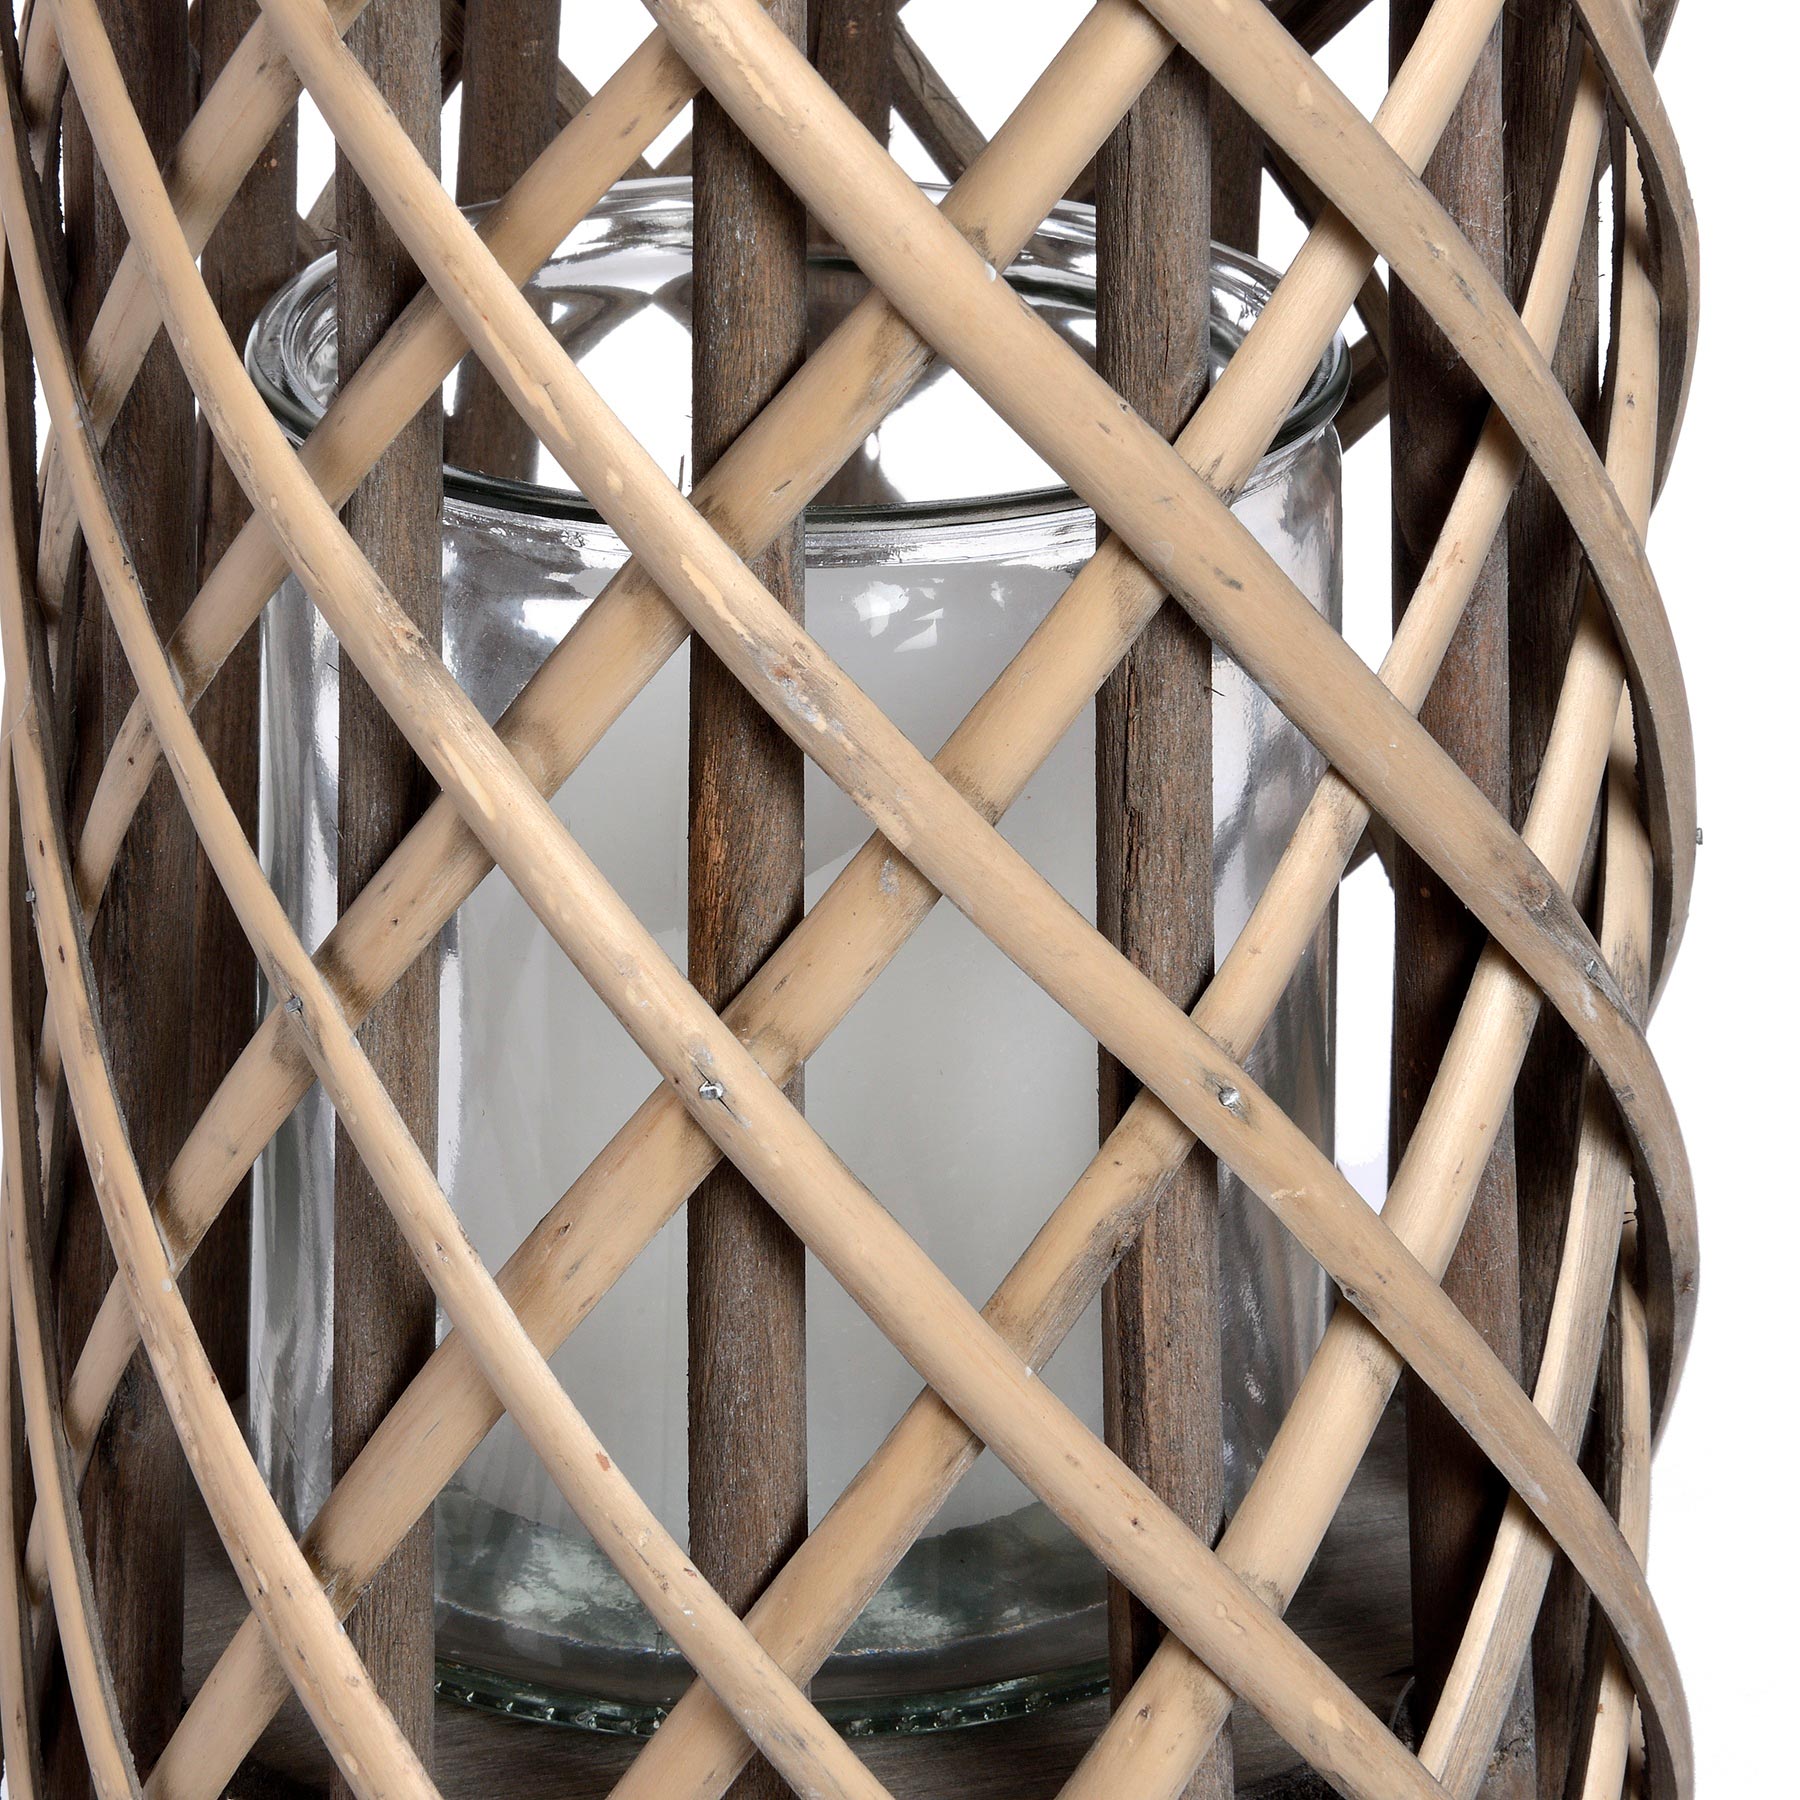 Large Wicker Lantern with Glass Hurricane - Image 2